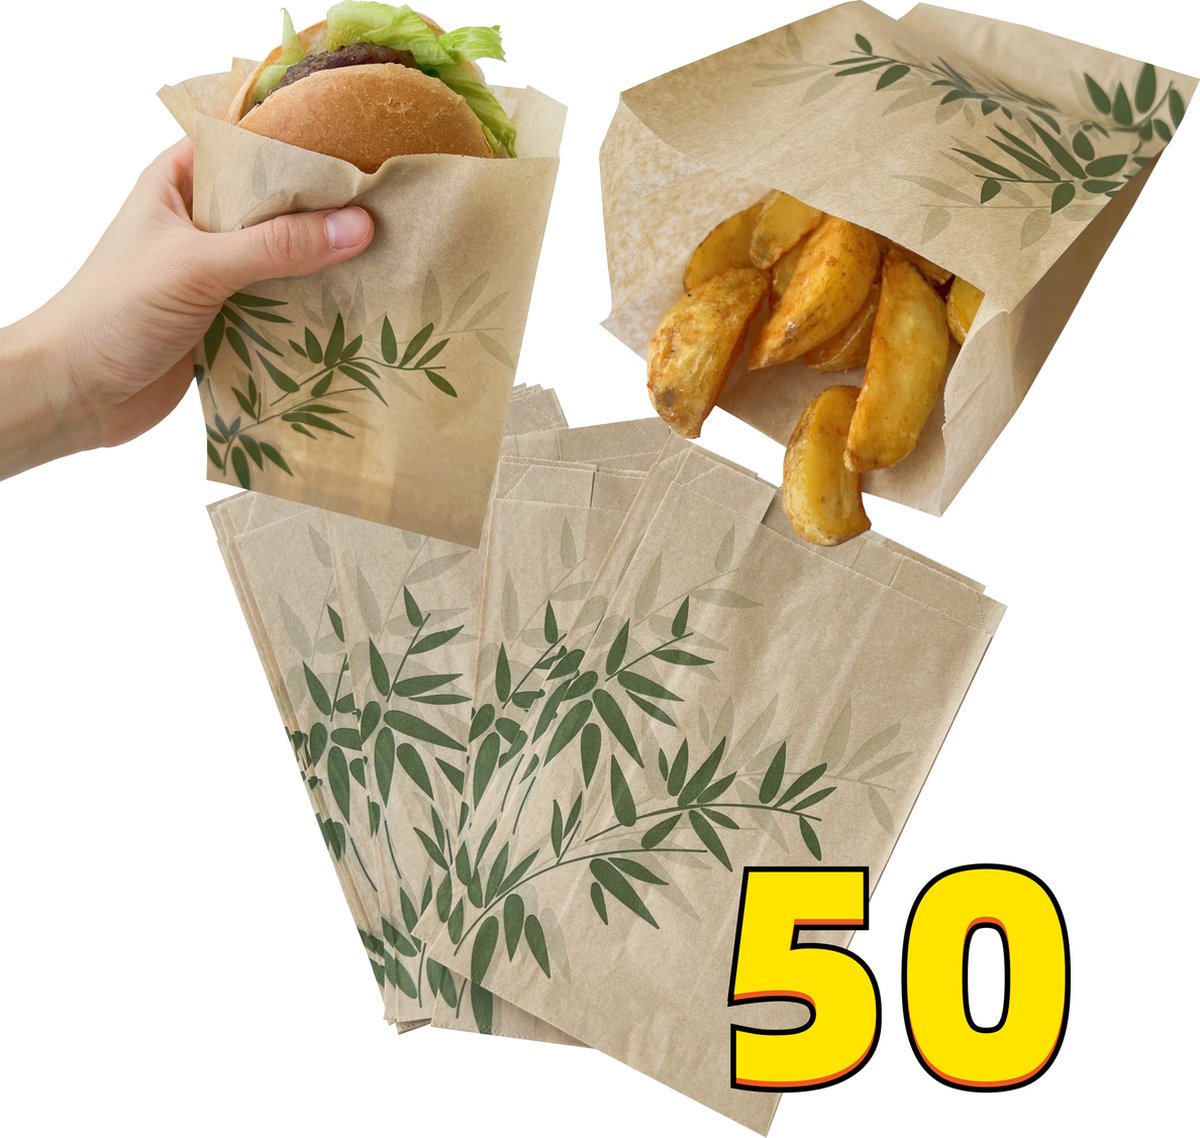 Rainbecom - 50 Stuks - Hamburger Zakje Papier - Vetvrij Papier - Papieren Zakken - Bamboe